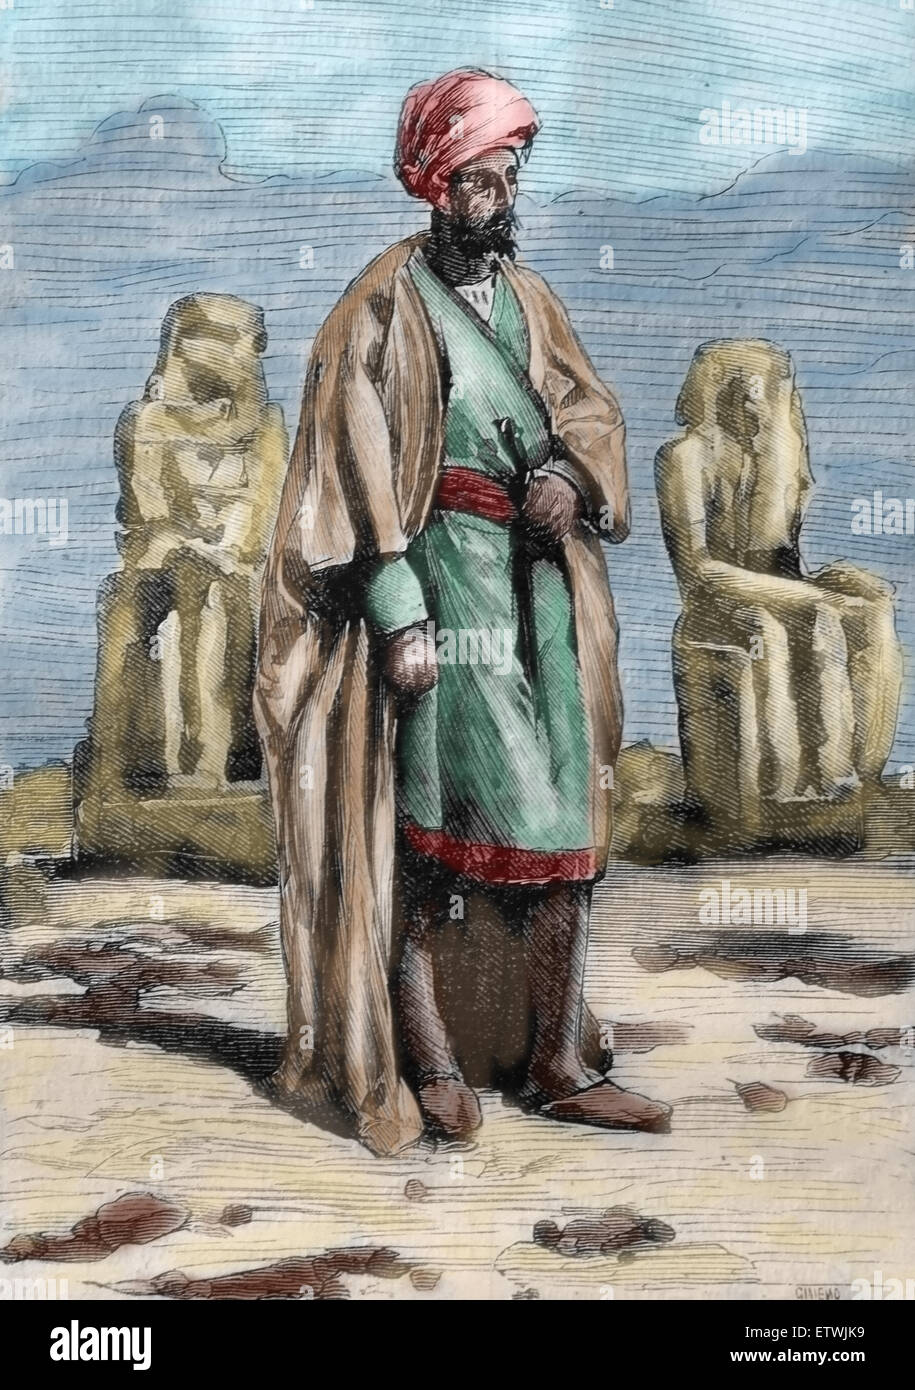 Ibn Battuta (1304-1369). Moroccan explorer. Ibn Battuta in Egypt. Illustration by Leon Benett from book by Jules Verne, 1878. Stock Photo